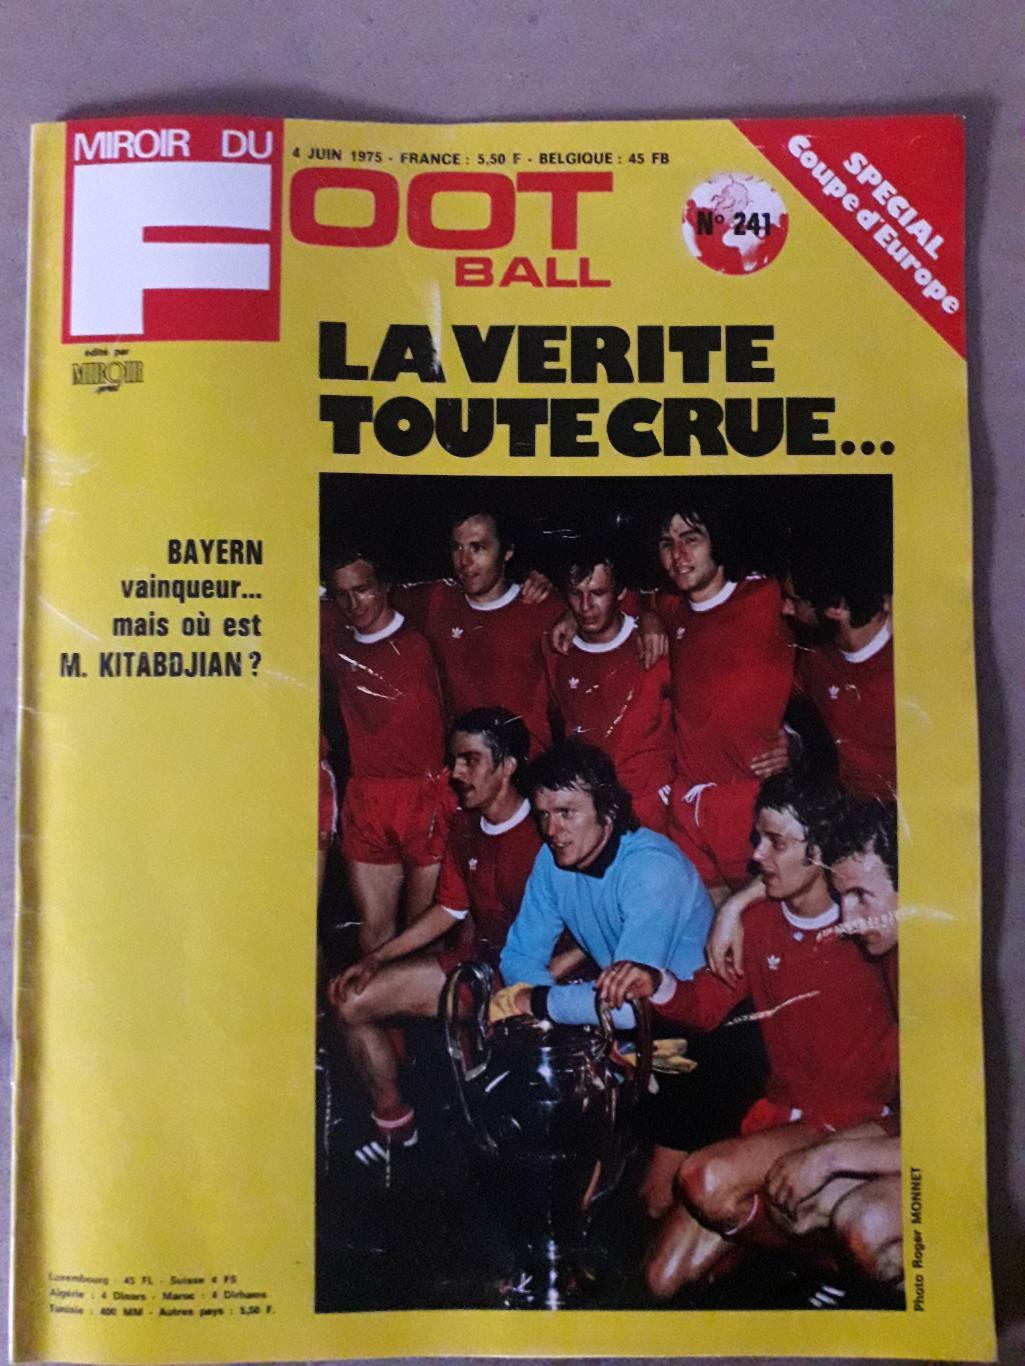 Miroir du Football Nr. 241/1975